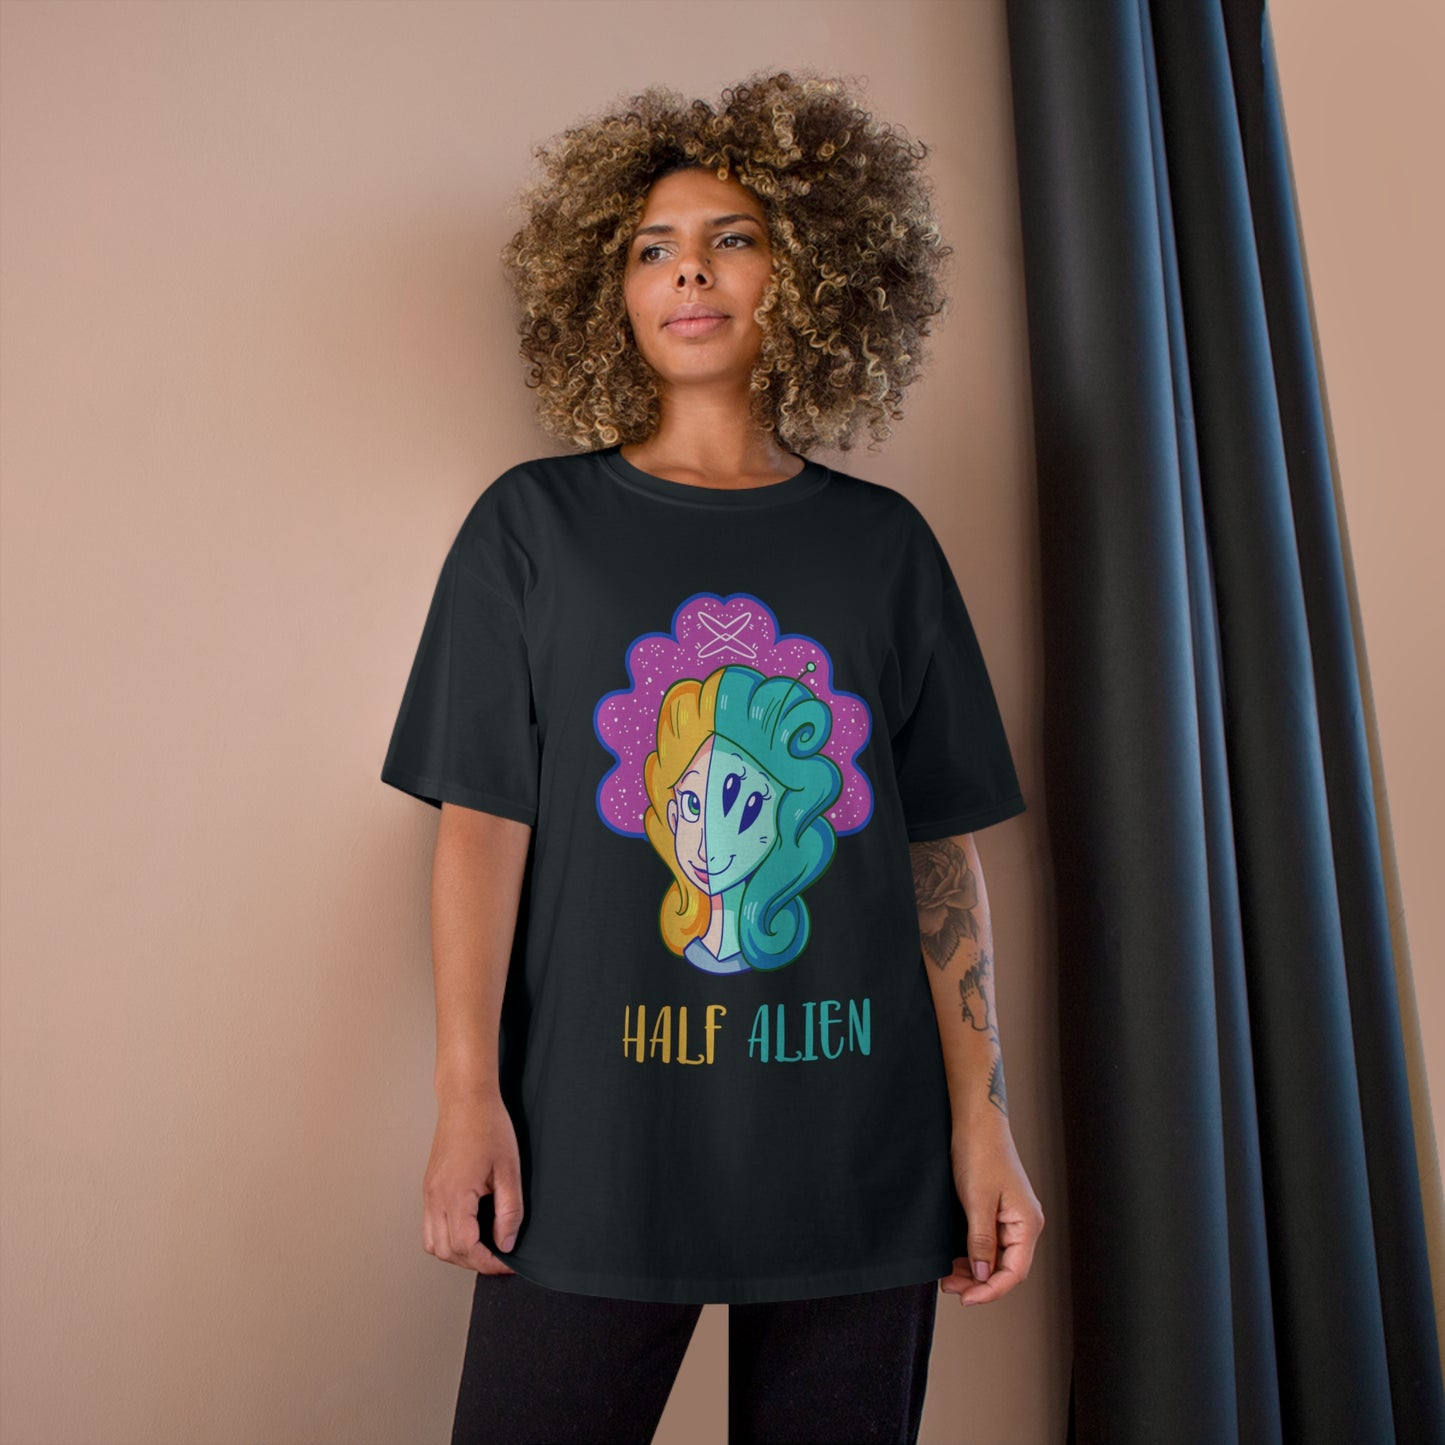 Half alien T-Shirt